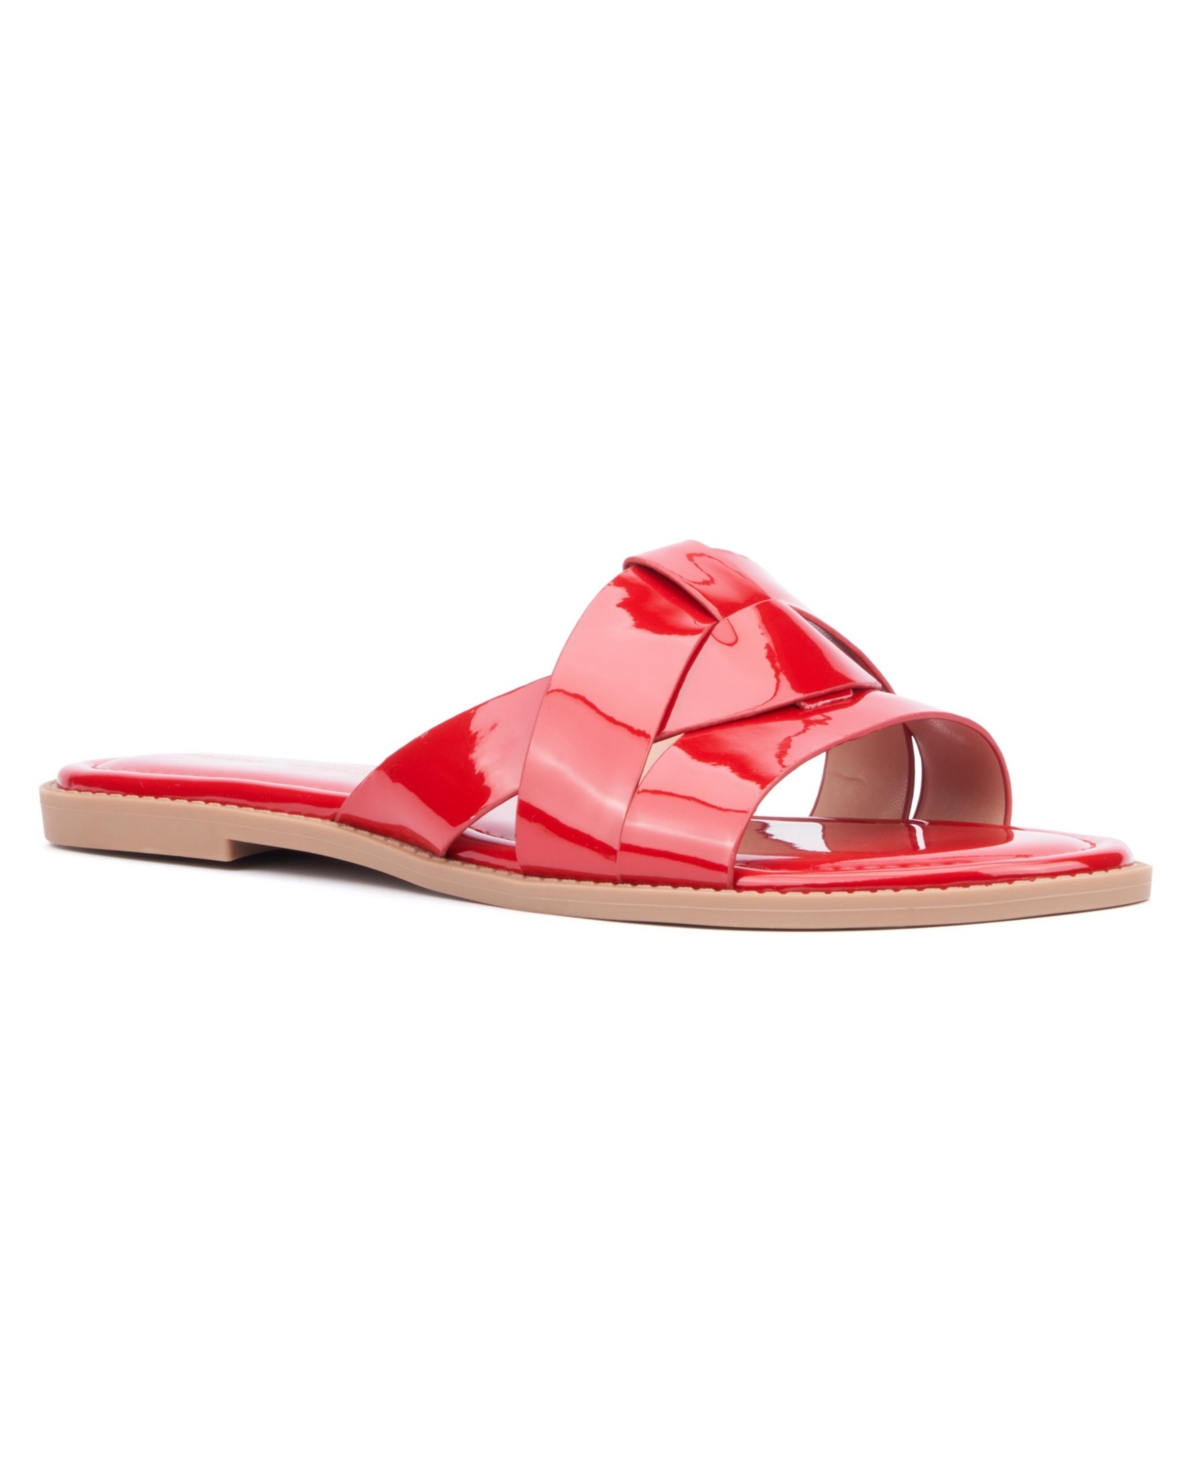 Women's Tiana Wide Width Flats Sandal - Neon pink